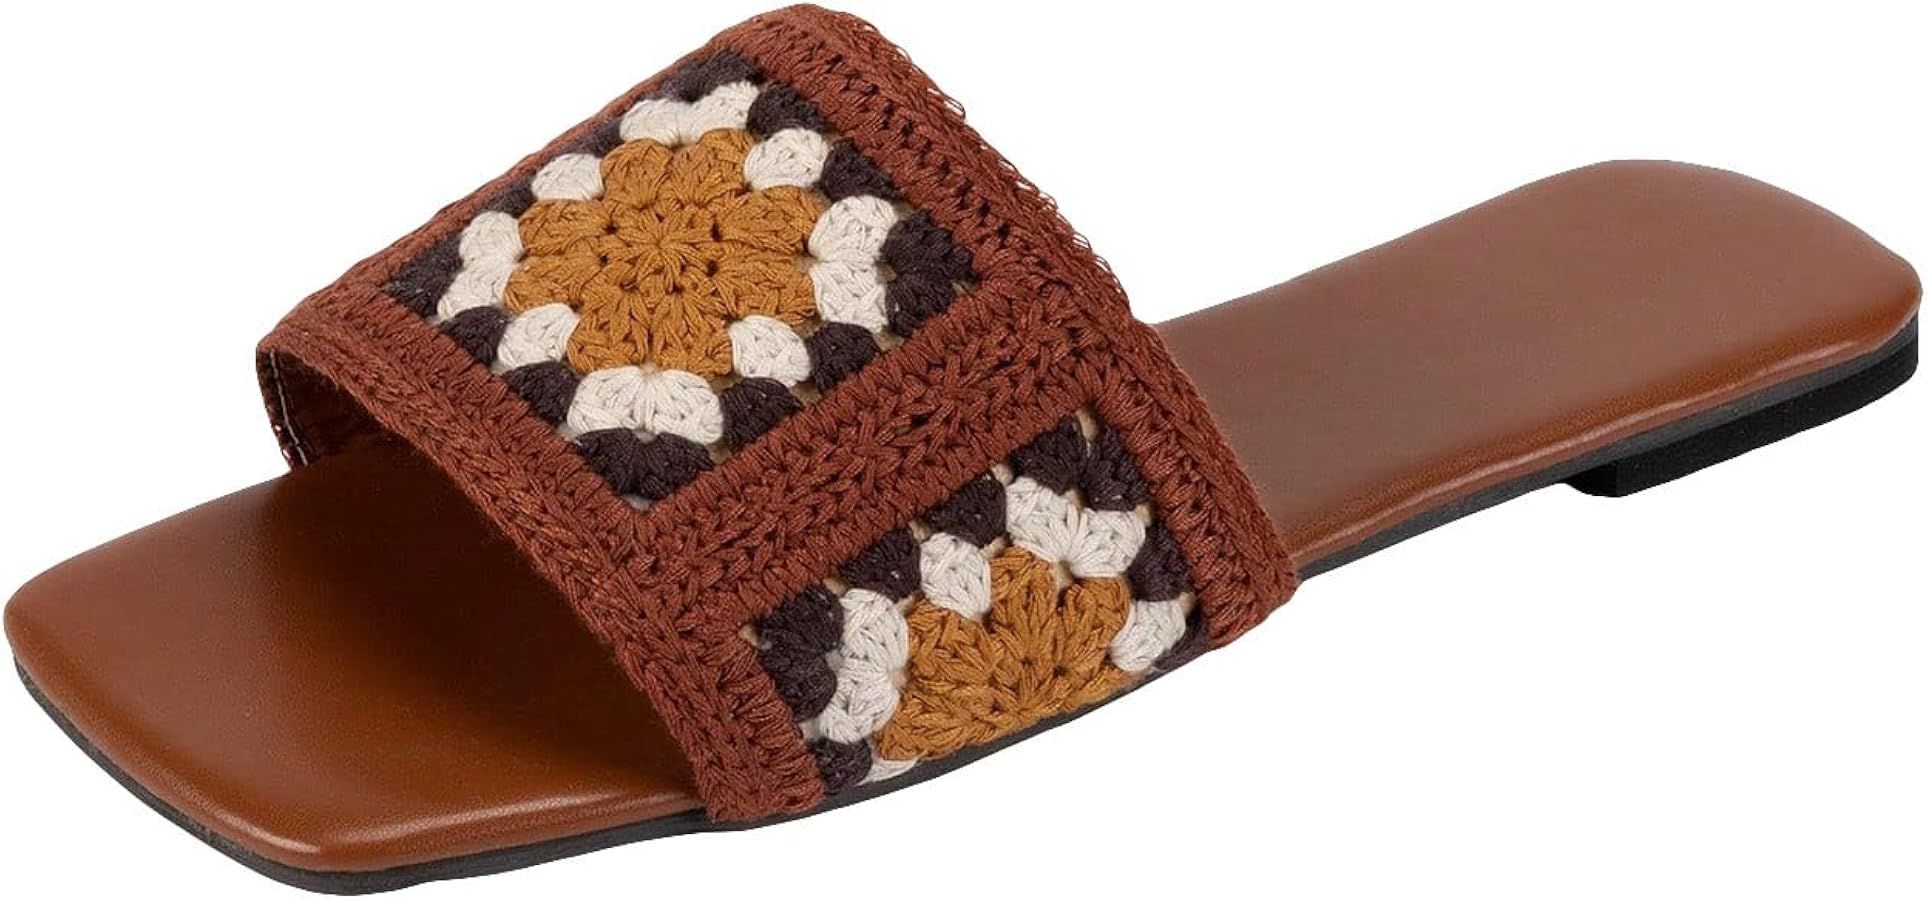 OYOANGLE Women's Colorblock Crocheted Square Open Toe Flat Sandals Lightweight Slip on Slides Bea... | Amazon (US)